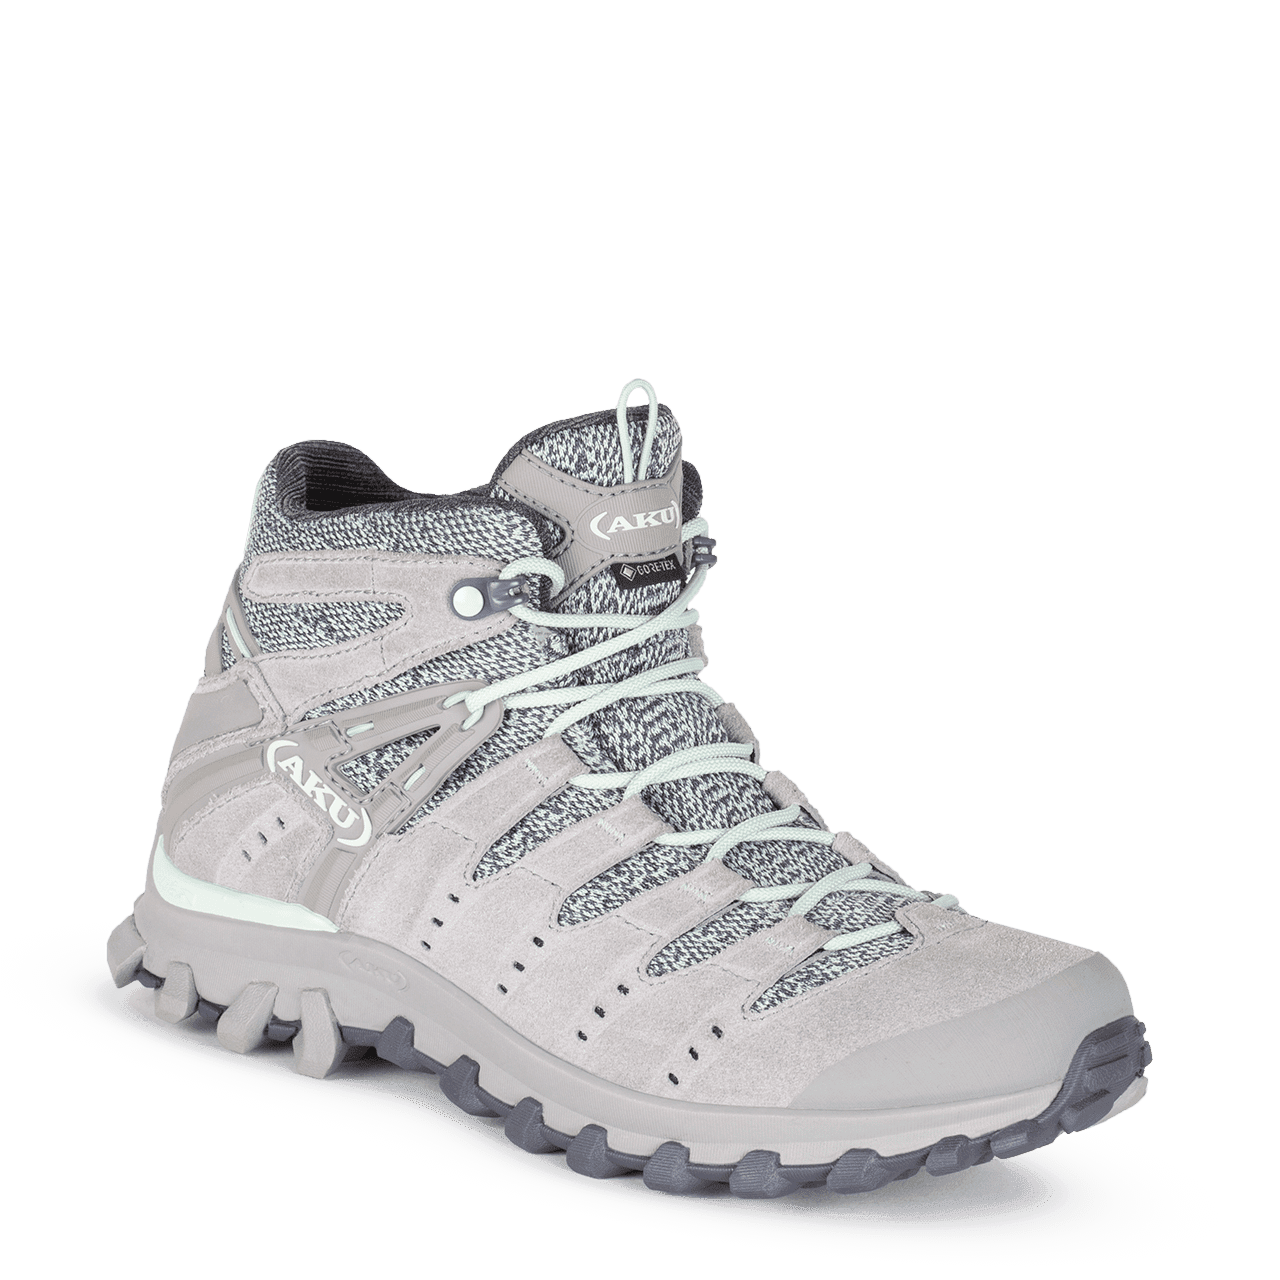 AKU Alterra Lite Mid GTX Ws Light grey-Jade: Women's Hiking Boots 